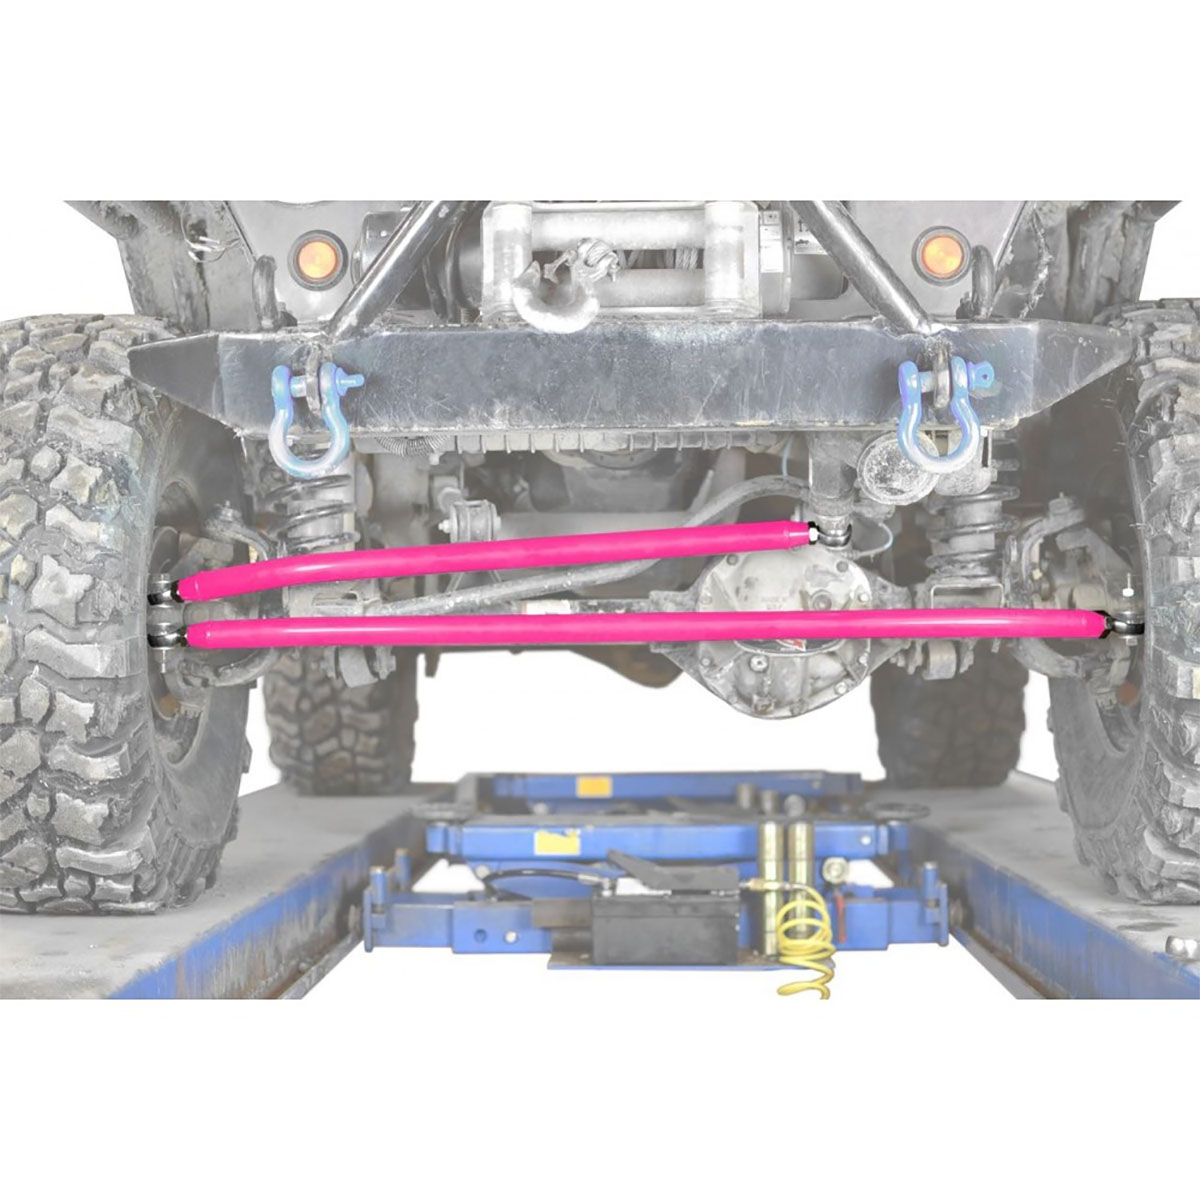 Jeep XJ Cherokee Hot Pink Crossover Steering Kit